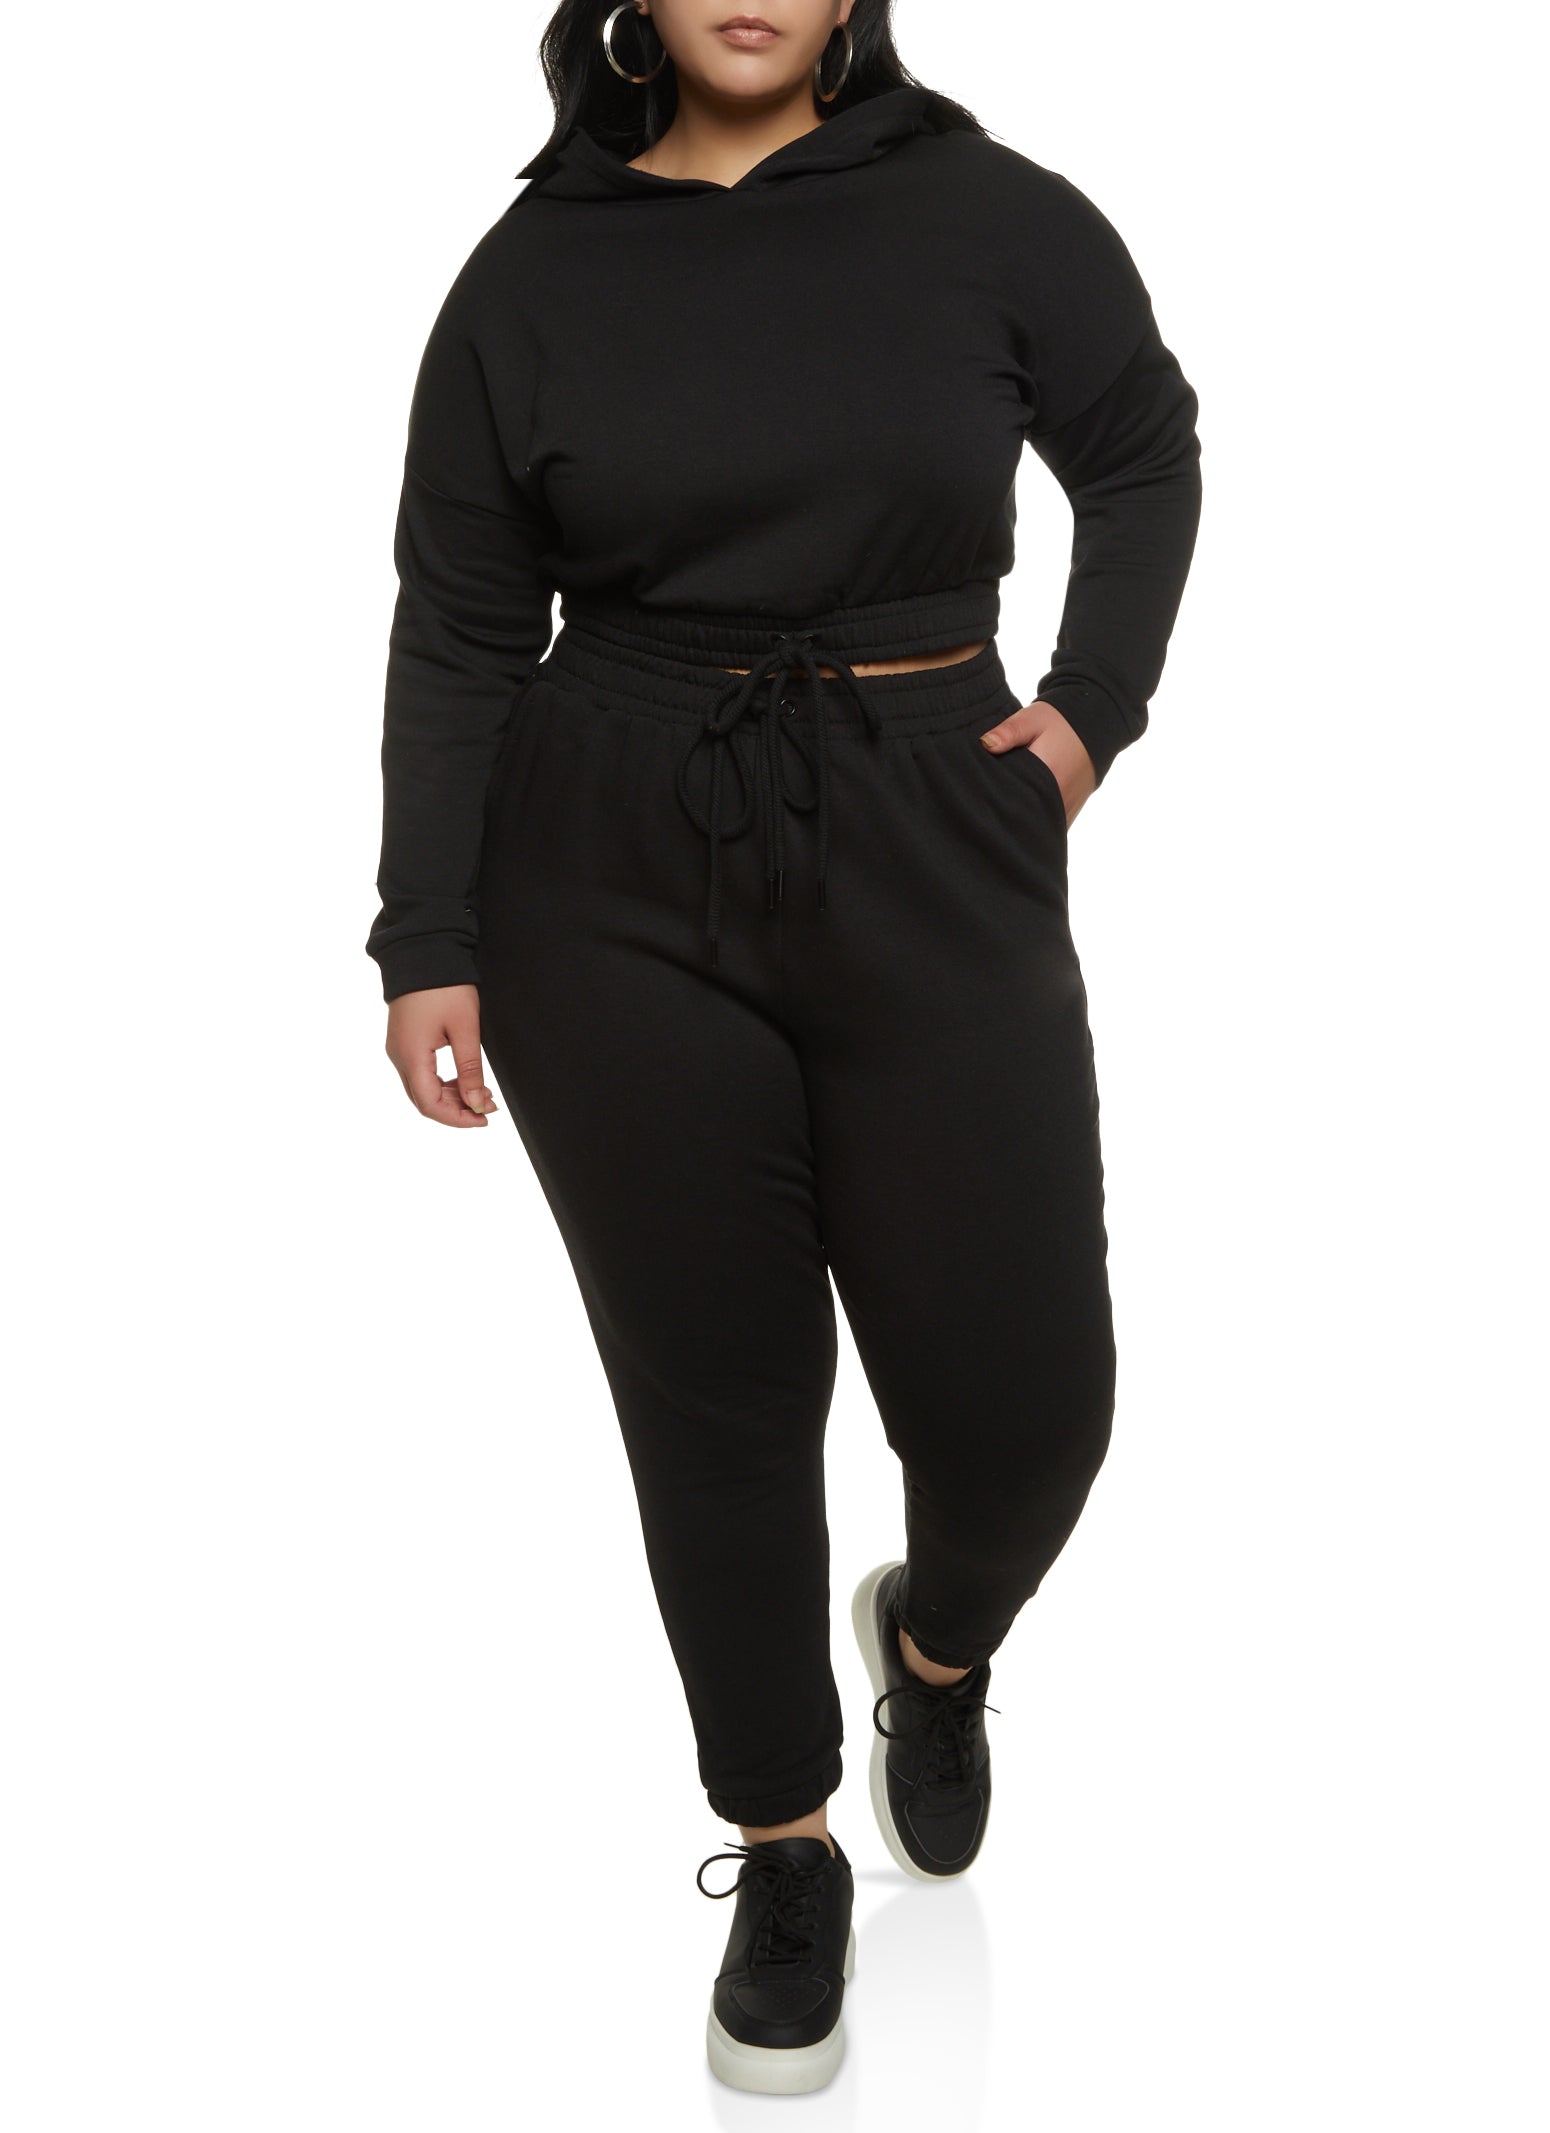 Womens Plus Size Drawstring Hem Fleece Pullover Hoodie, Black, Size 1X